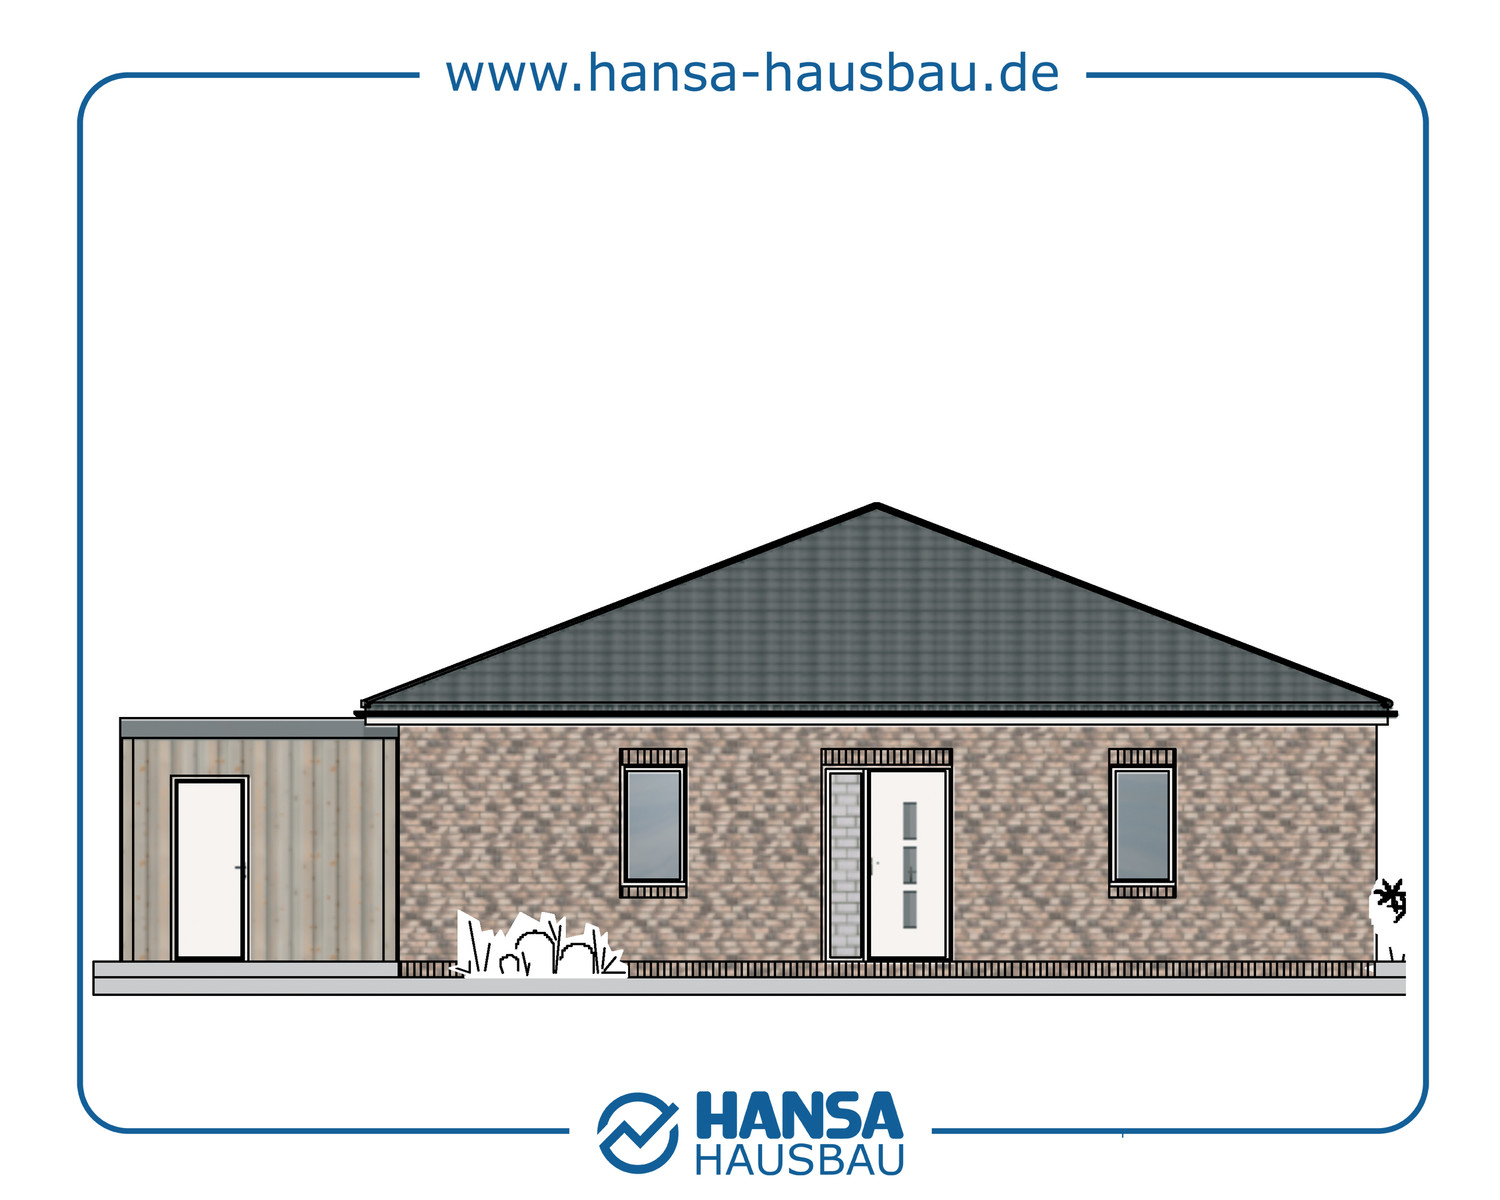 Hansa Hausbau Bauplanung Architektenhaus Neubau Bungalow